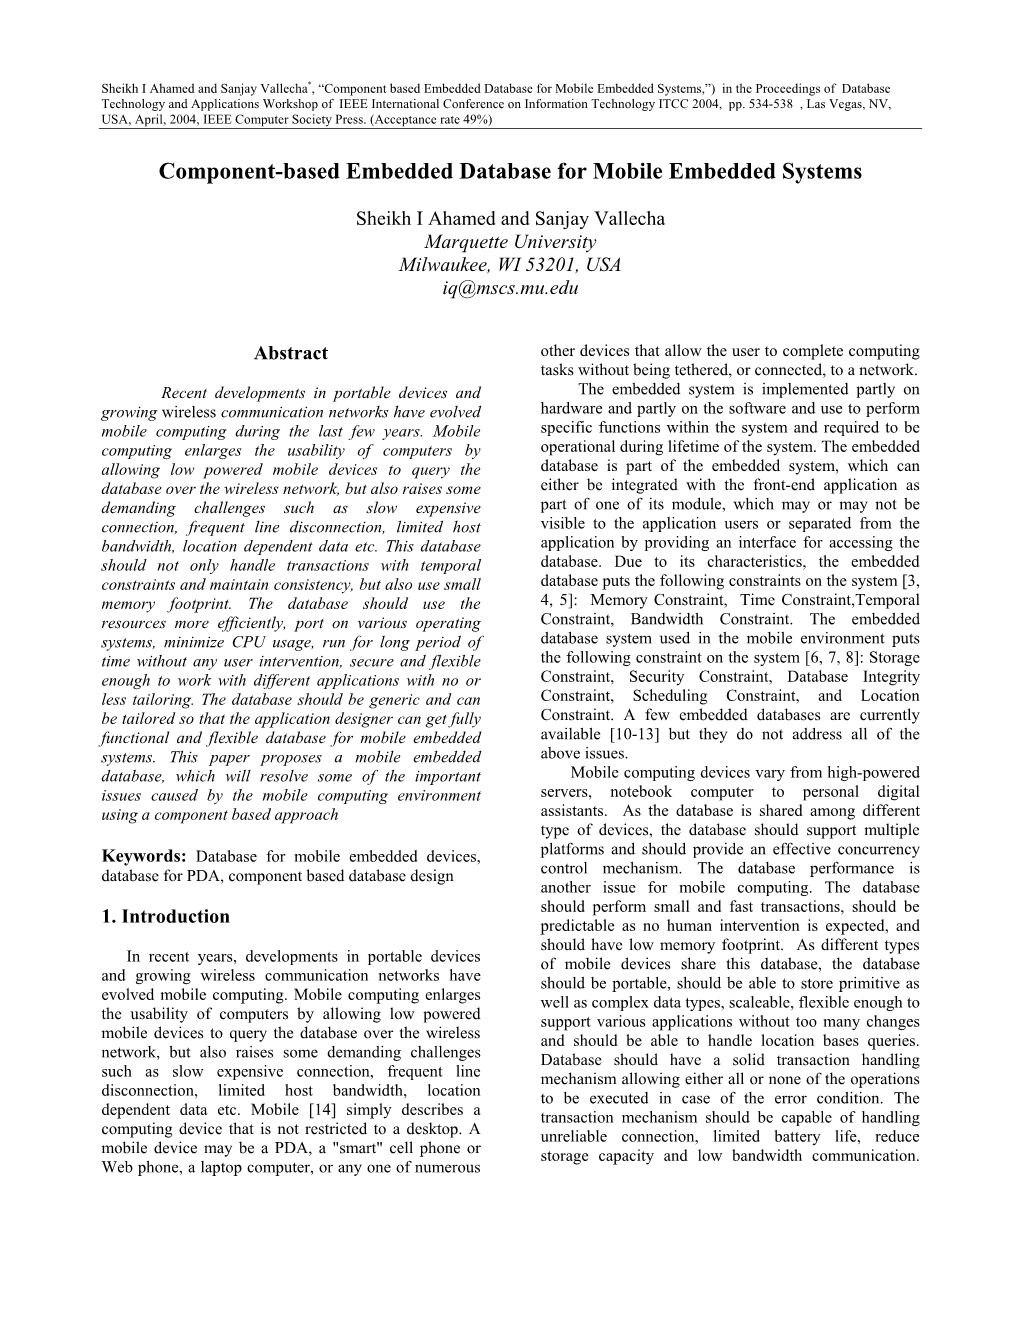 Component-Based Embedded Database for Mobile Embedded Systems